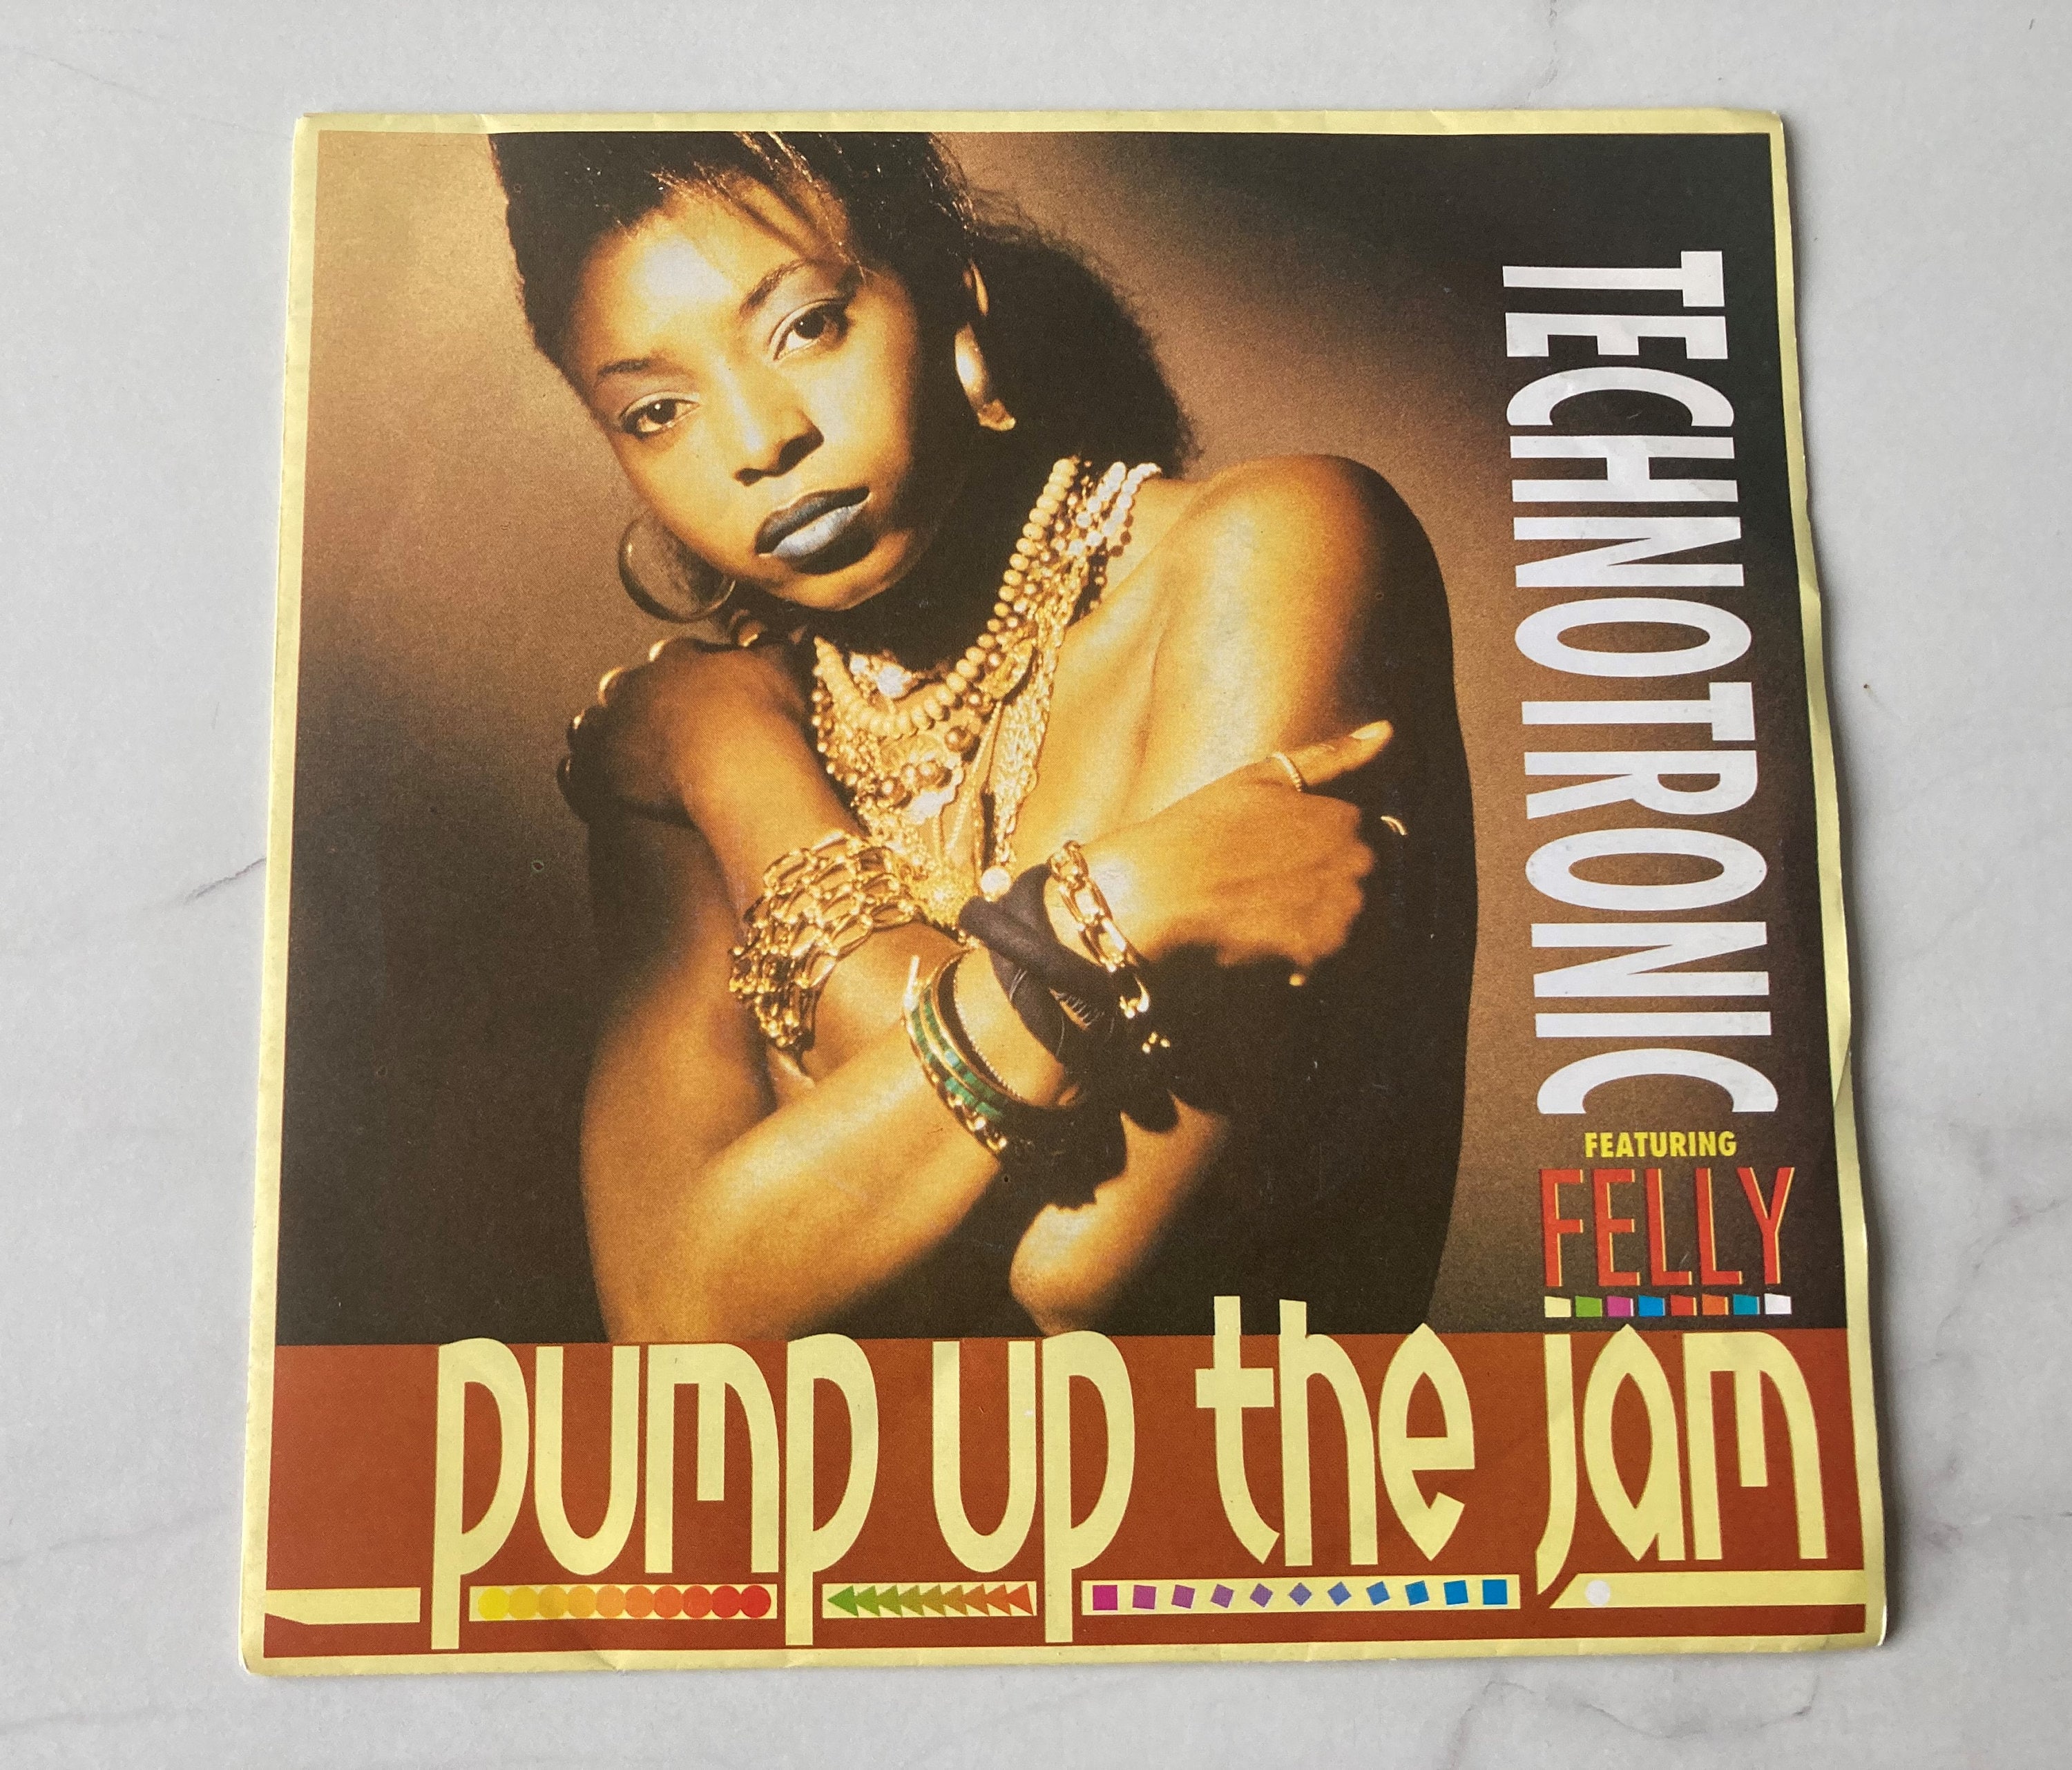 Technotronic Pump up the Jam Original 1989 UK Pressing - Etsy